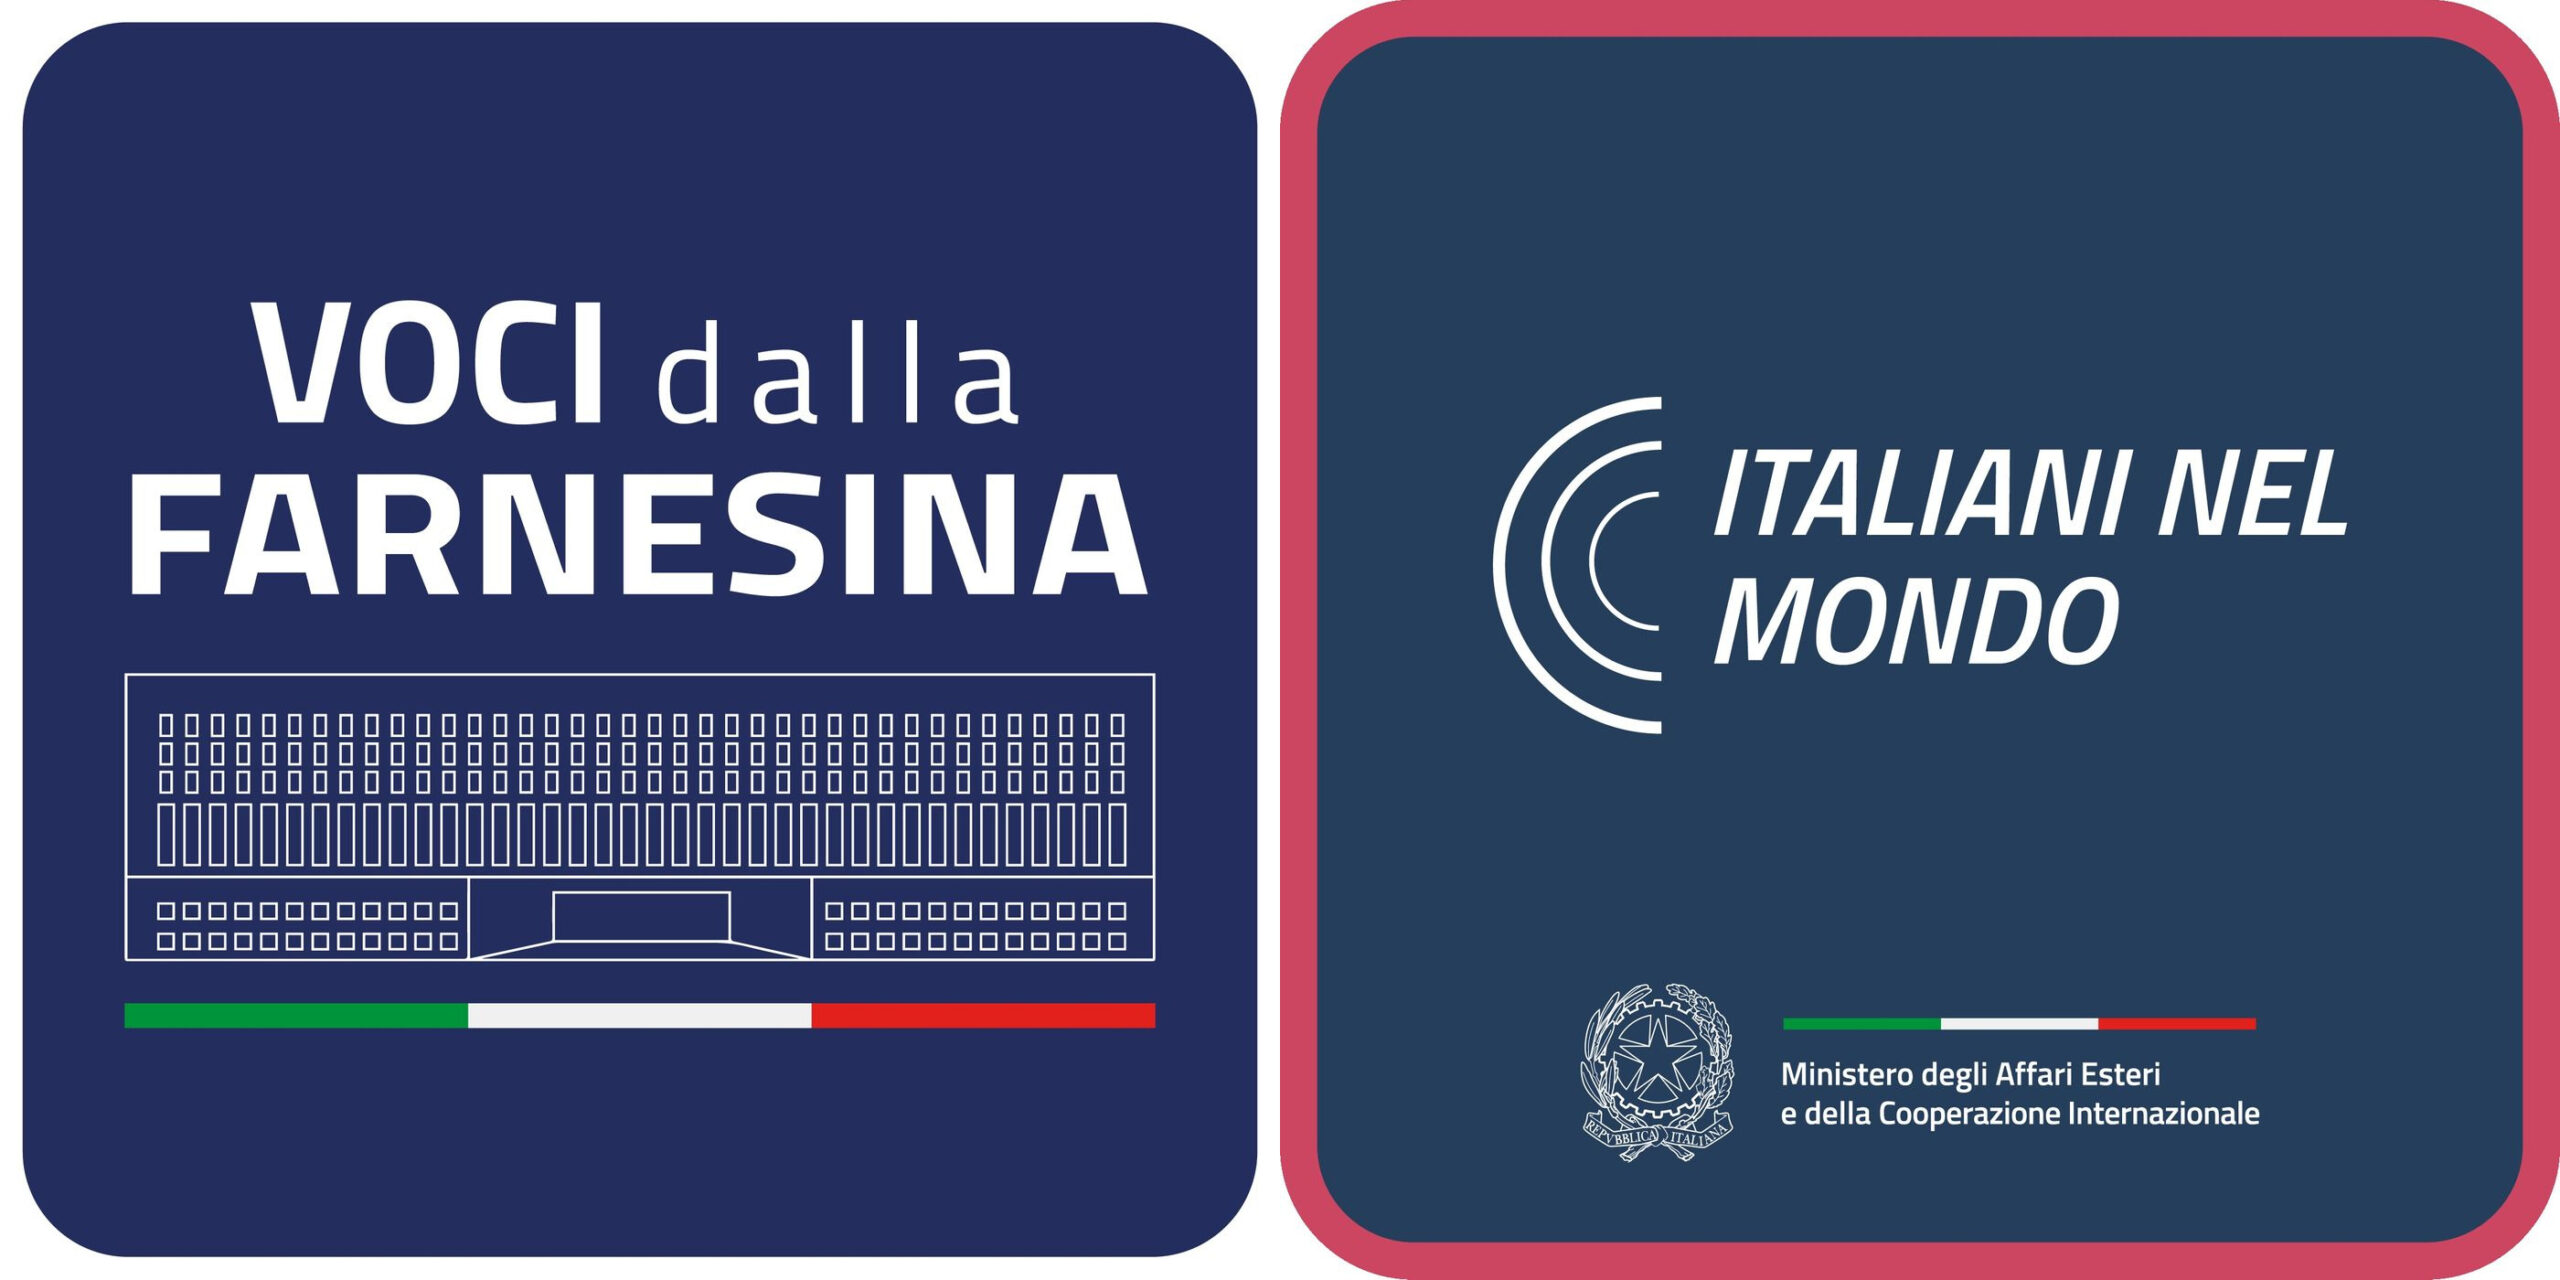 Crasis between the logos of "Voci della Farnesina" and "Italiani nel mondo"